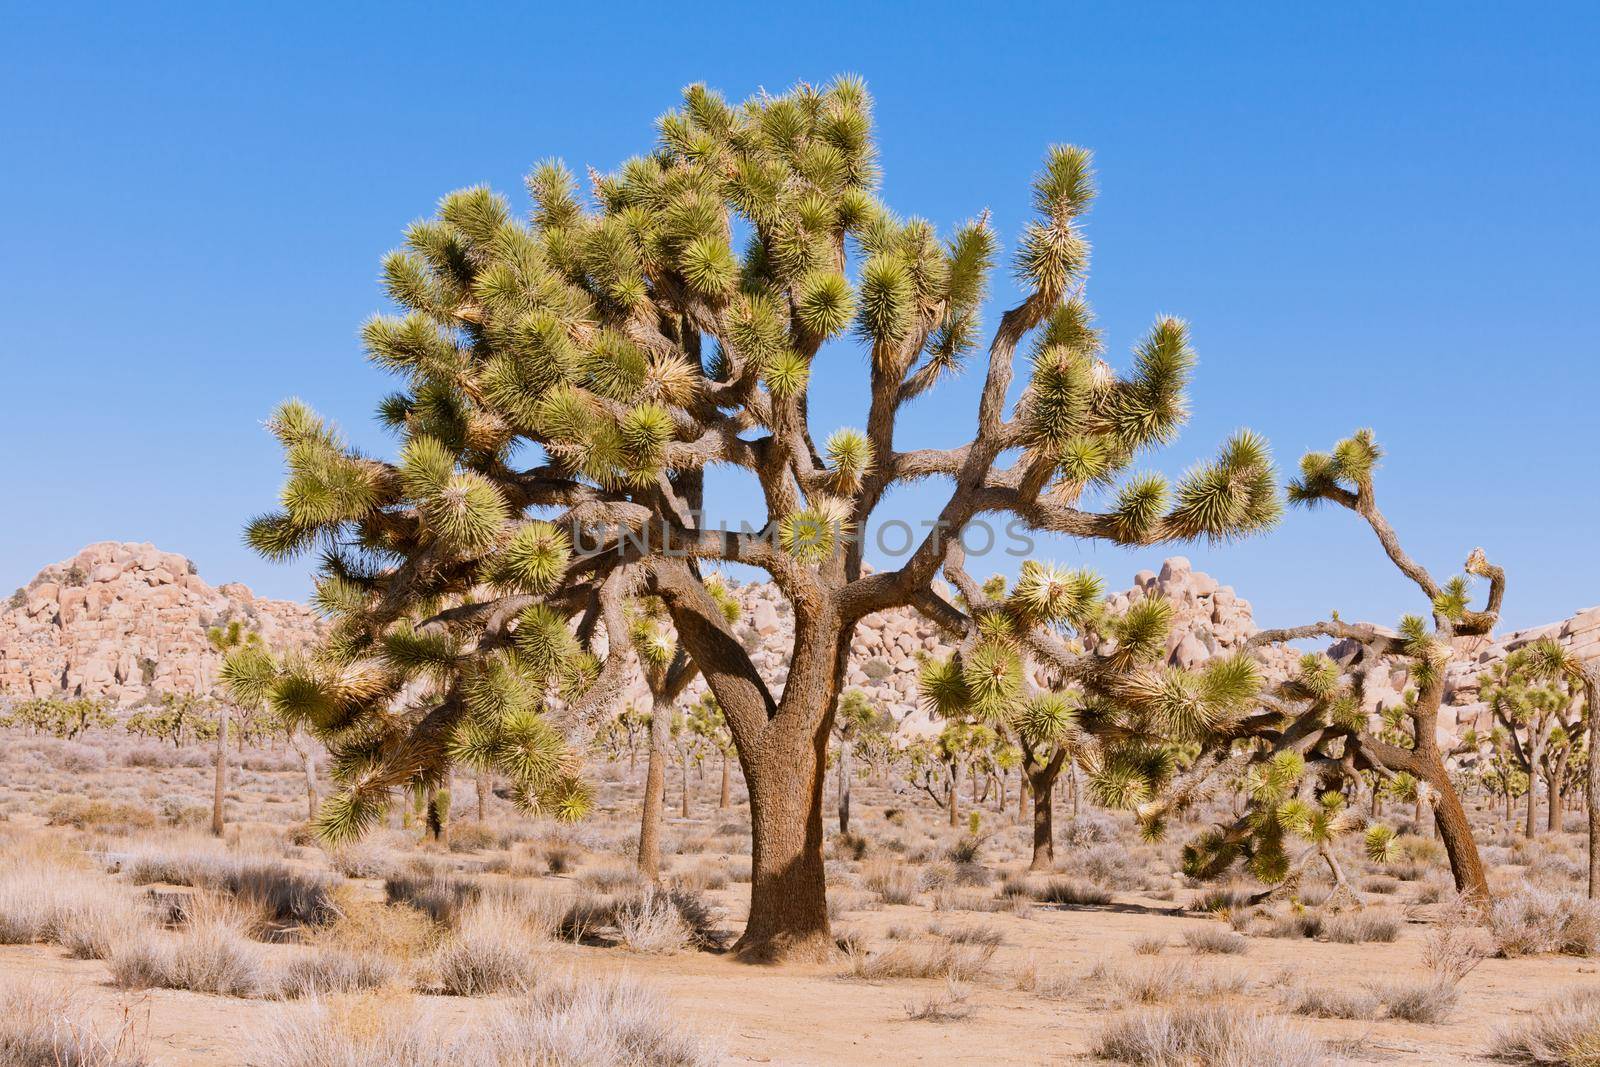 Joshua Tree Yucca brevifolia NP CA US by PiLens